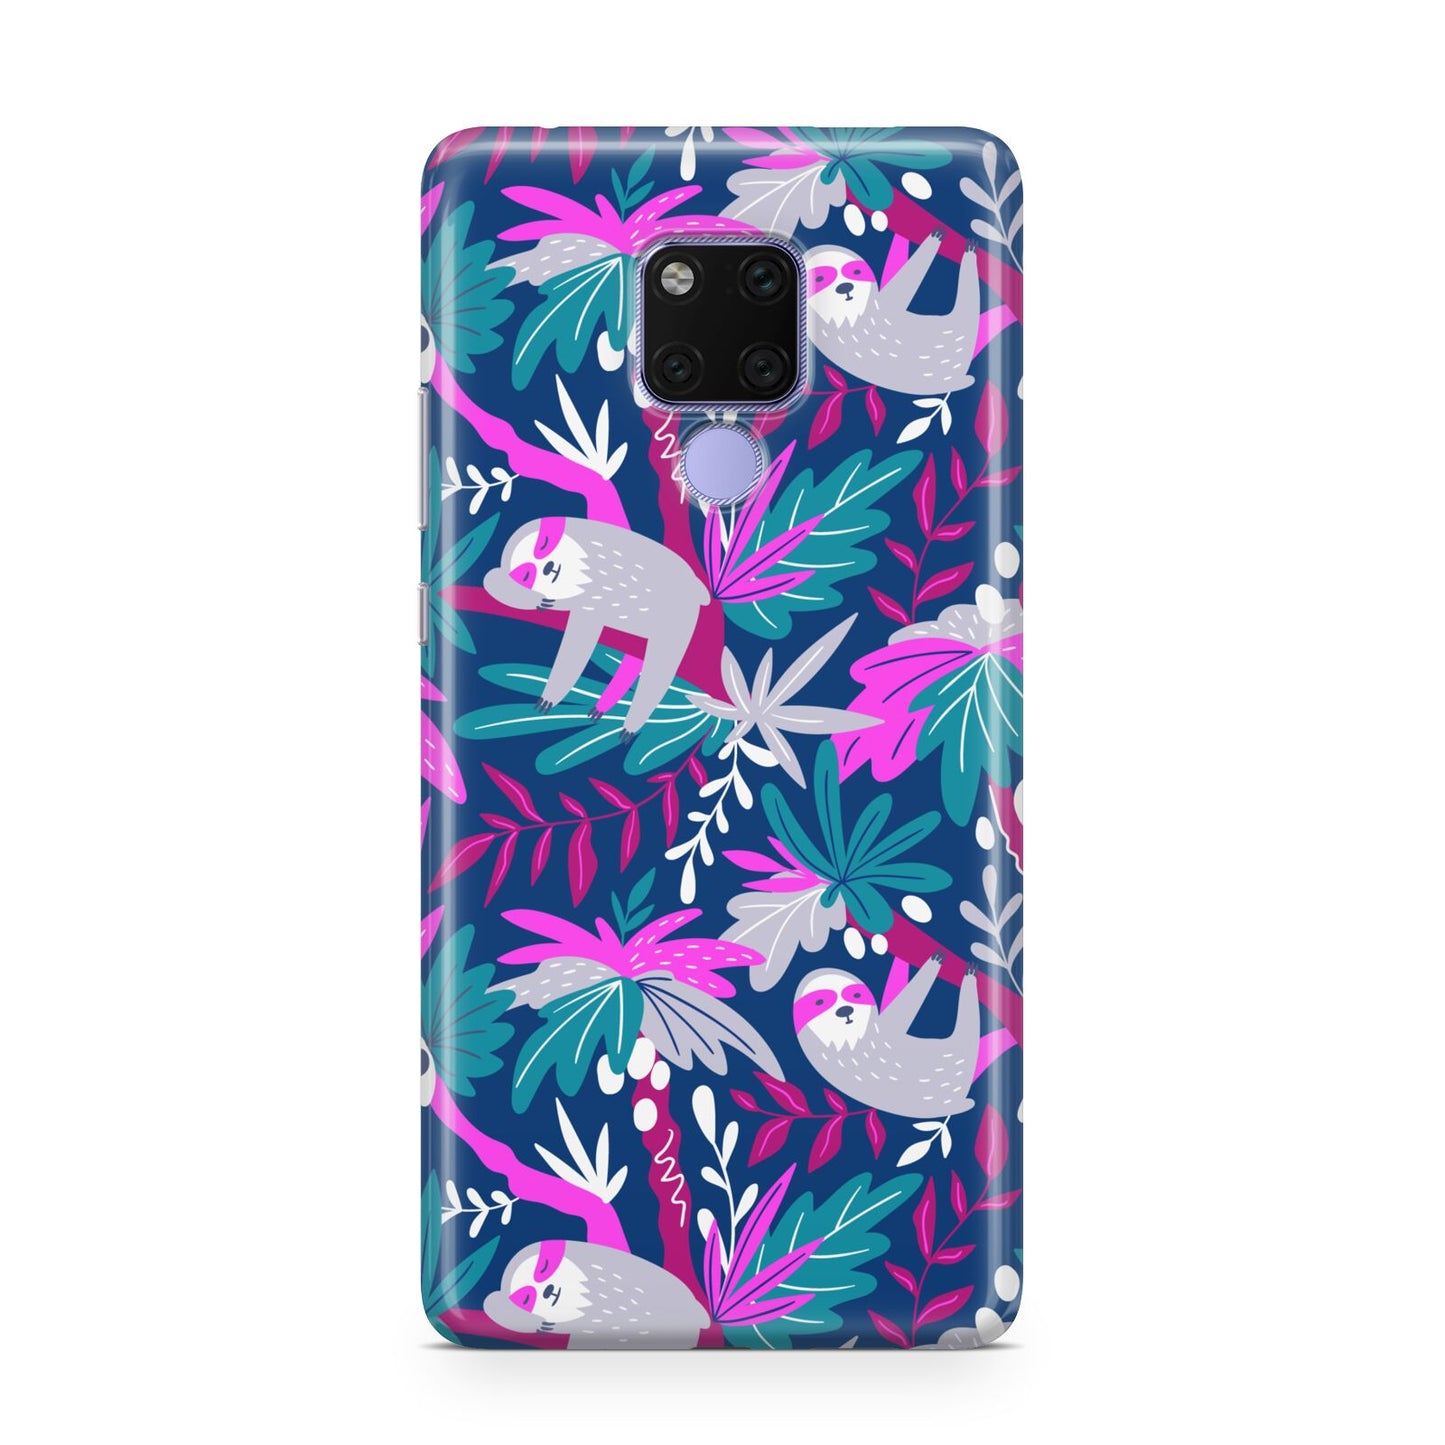 Sloth Huawei Mate 20X Phone Case